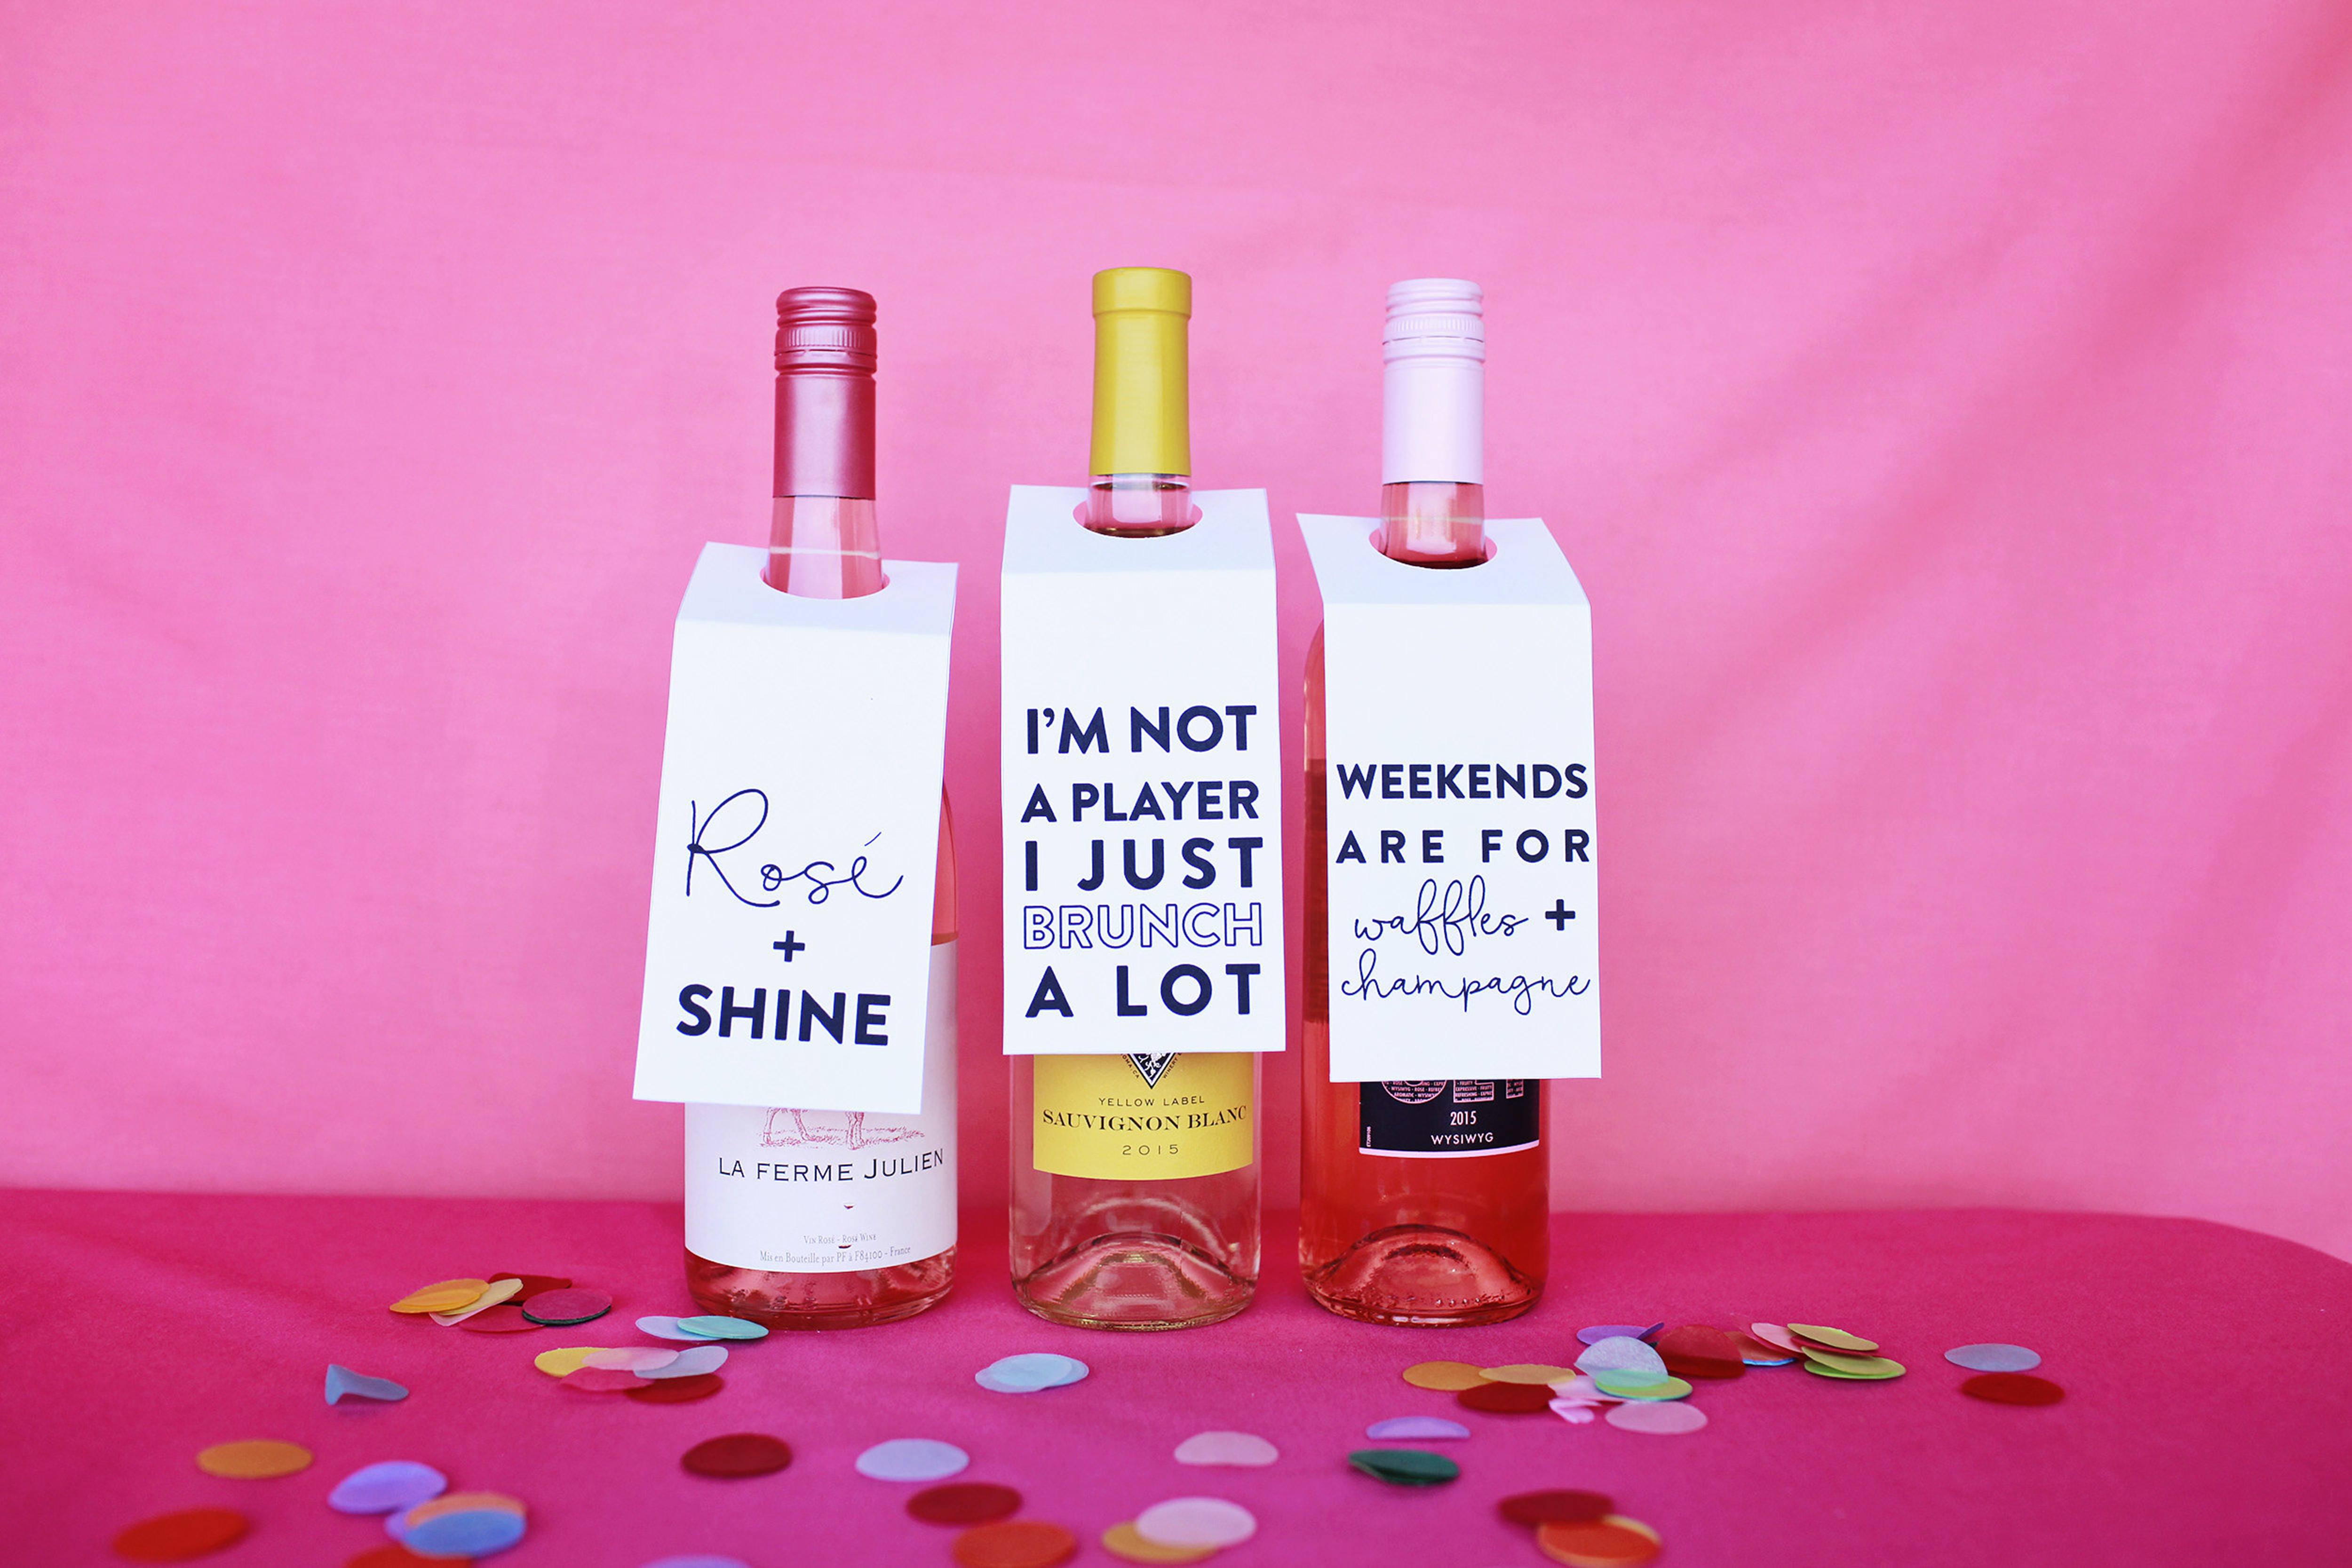 Rose and shine wine tags - free printable